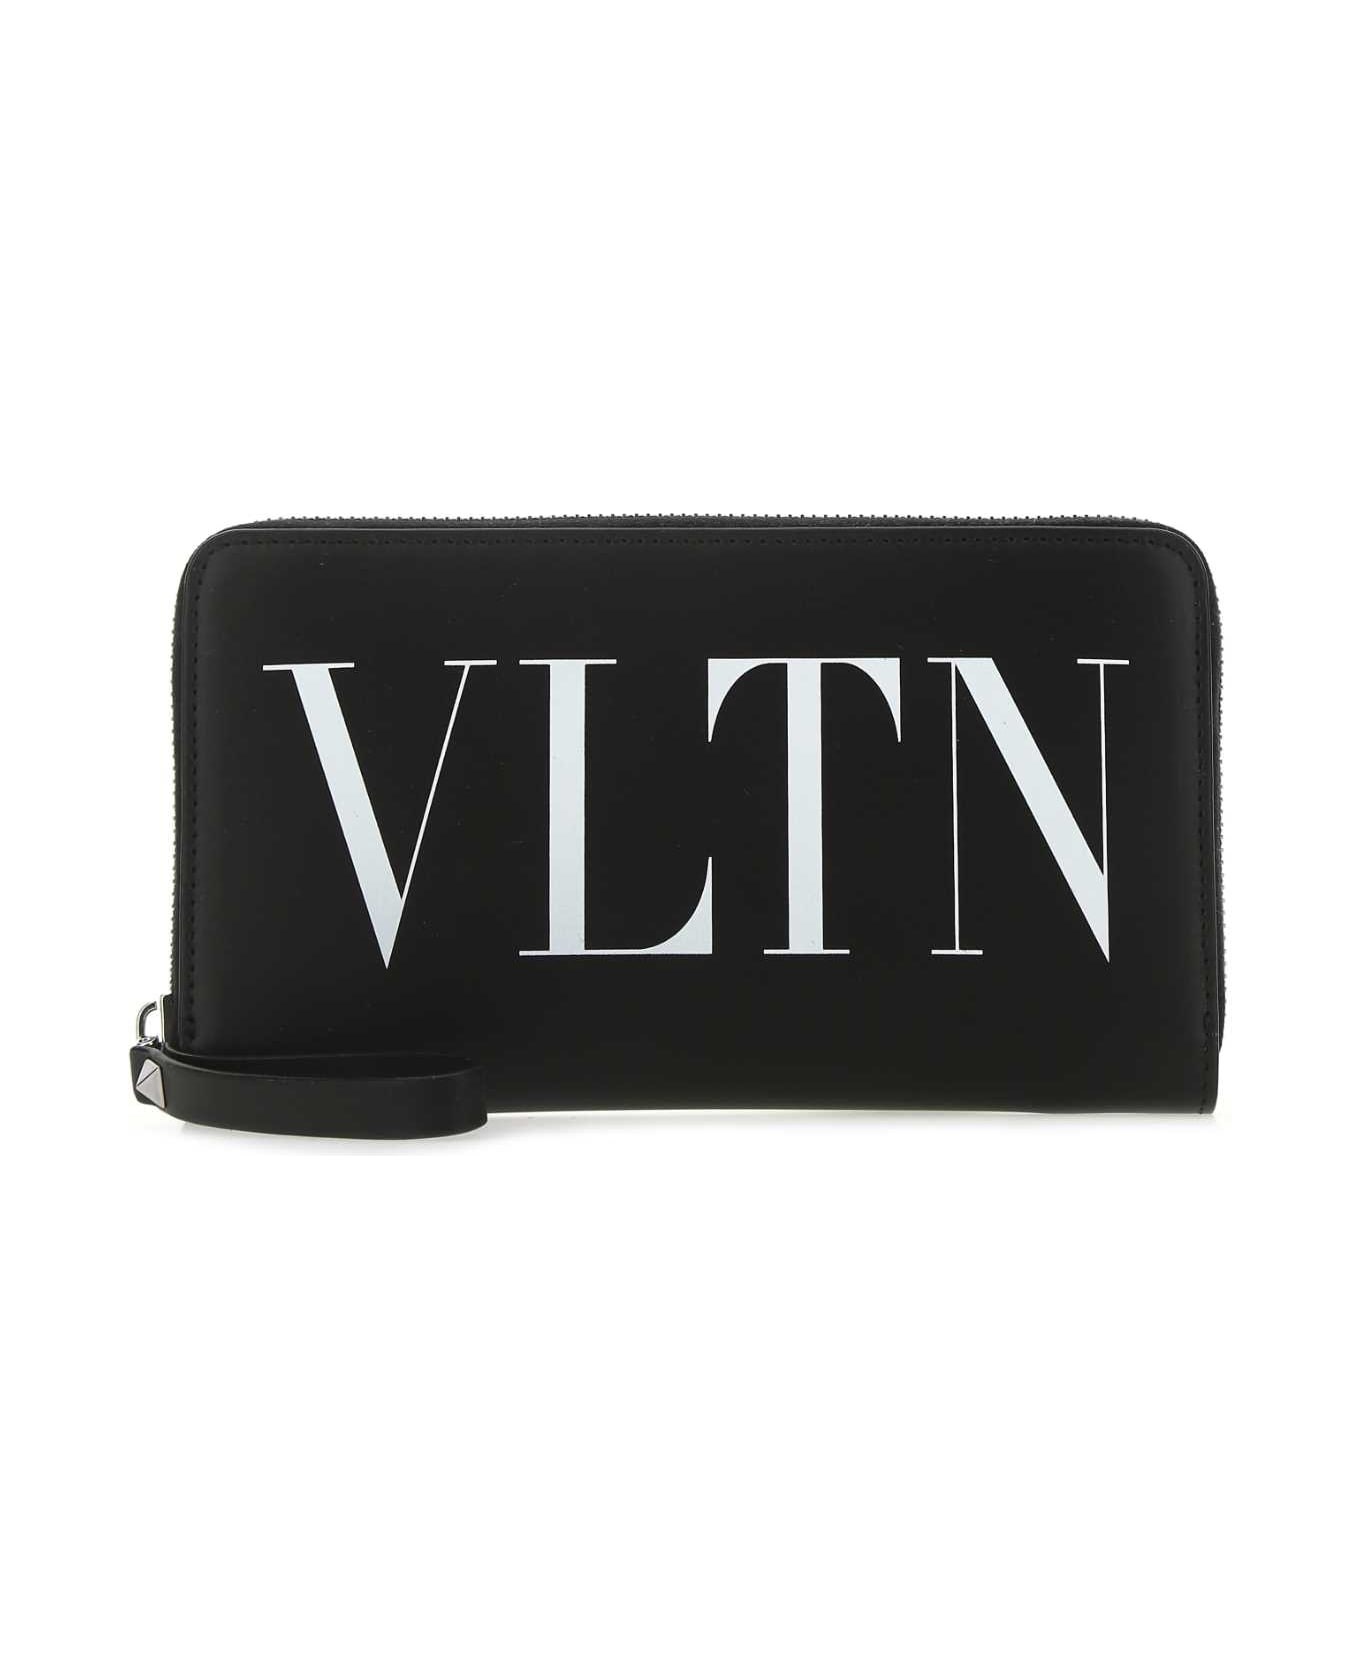 Valentino Garavani Black Leather Vltn Wallet - NERBIA